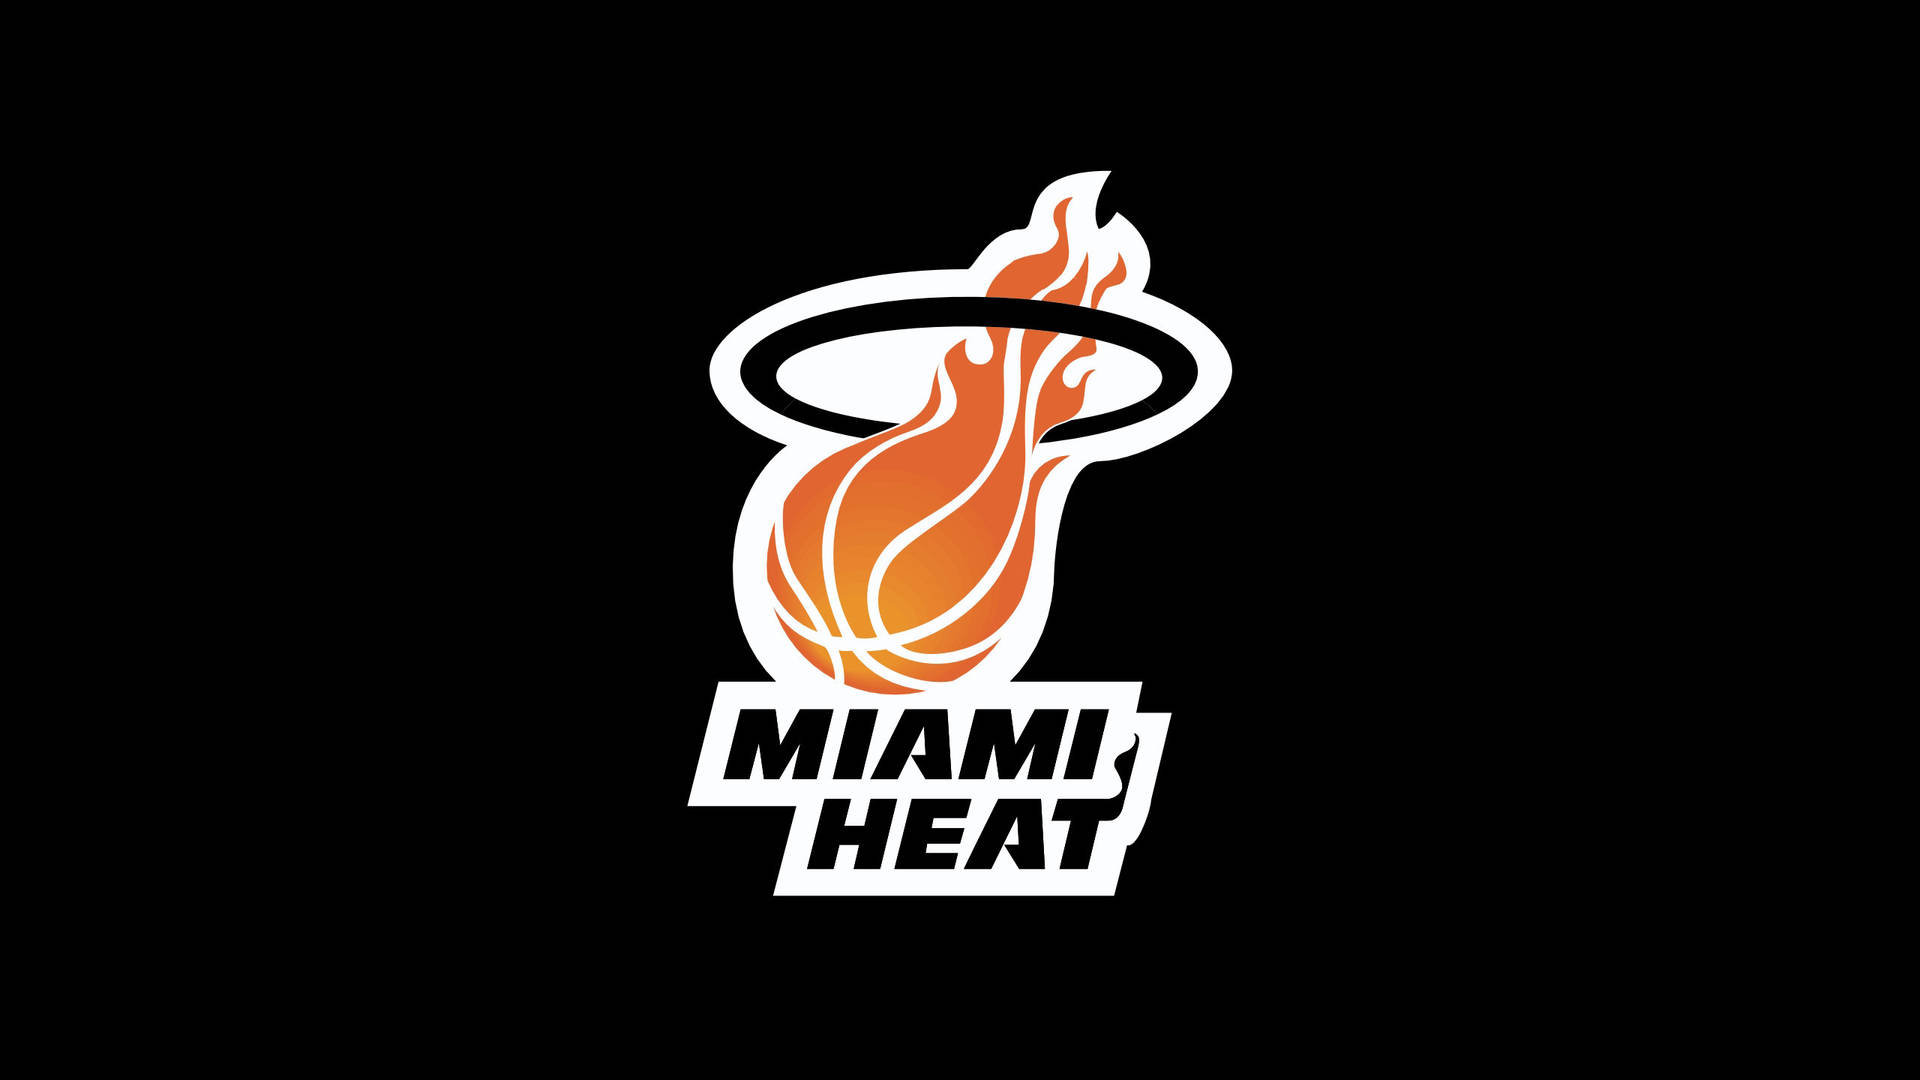 Miami Heat Poster Background